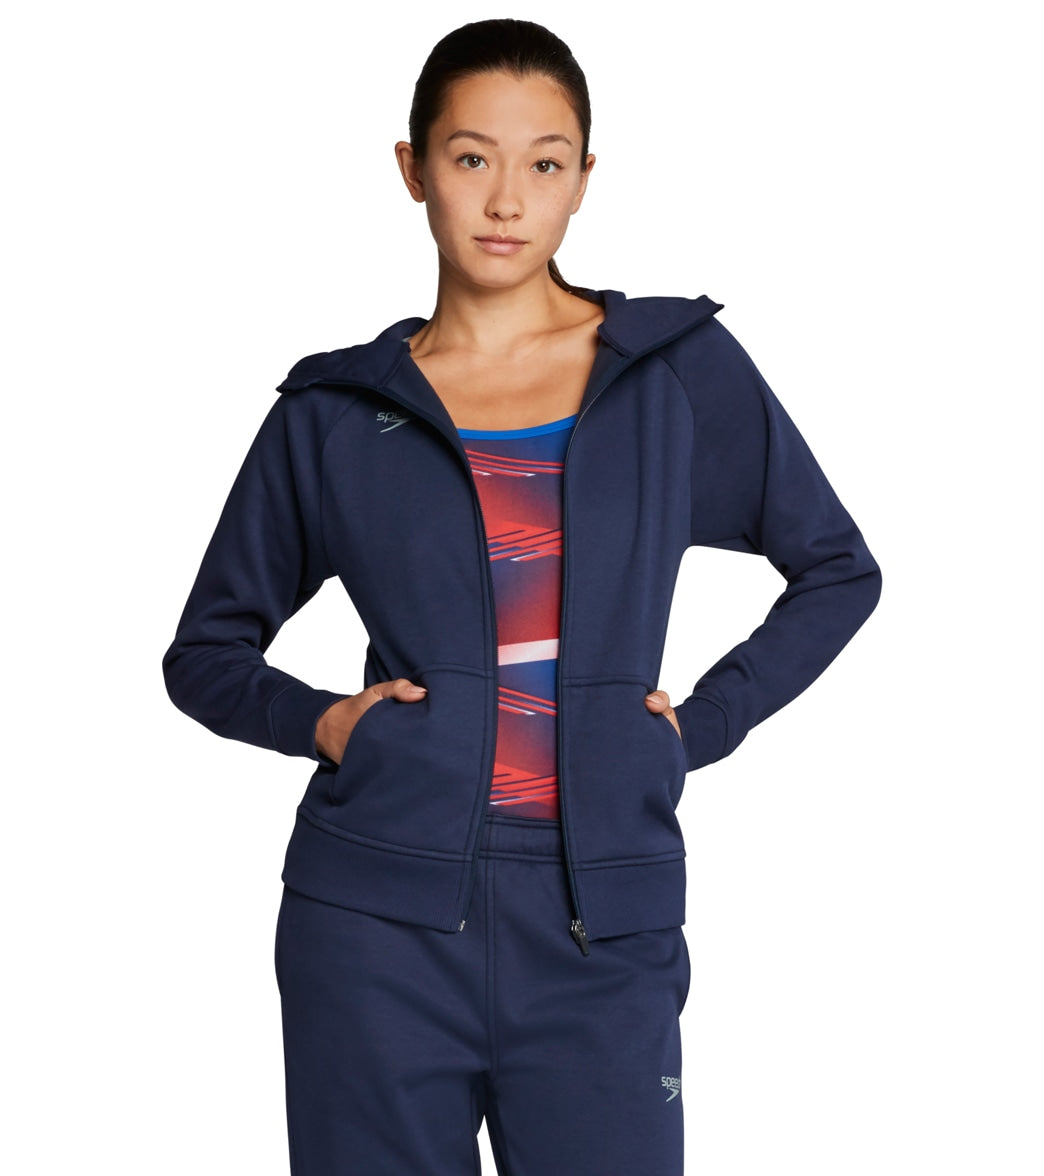 Speedo Women's Team Jacket - Navy Medium Size Medium Cotton/Polyester - Swimoutlet.com